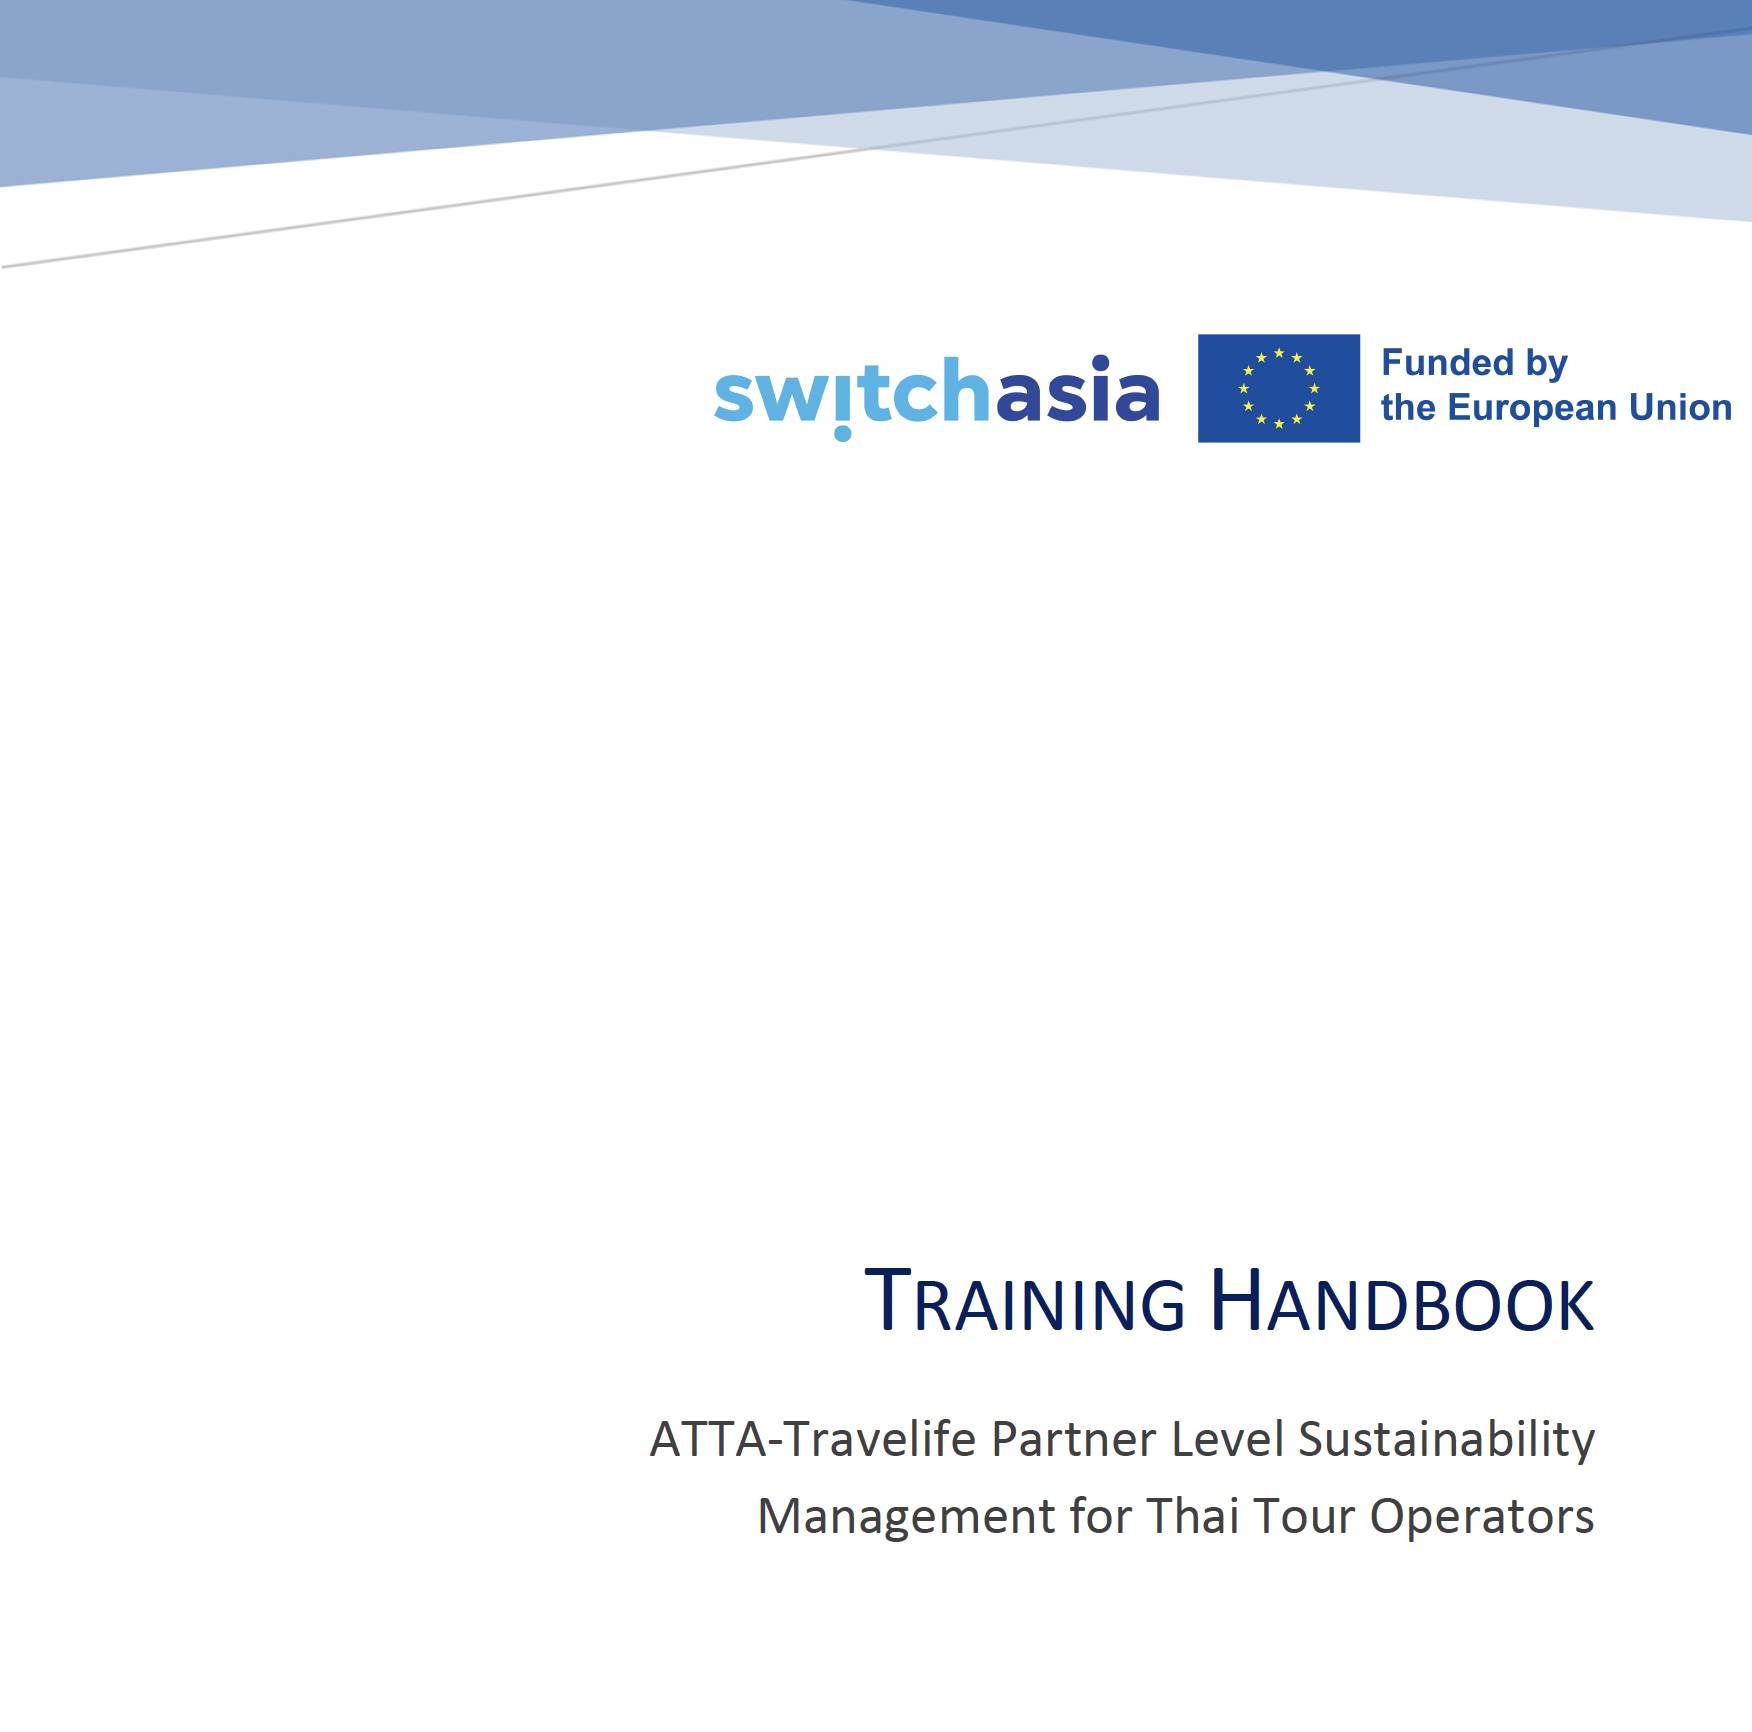 Training Handbook: ATTA-Travelife Partner Level Sustainability Management for Thai Tour Operators